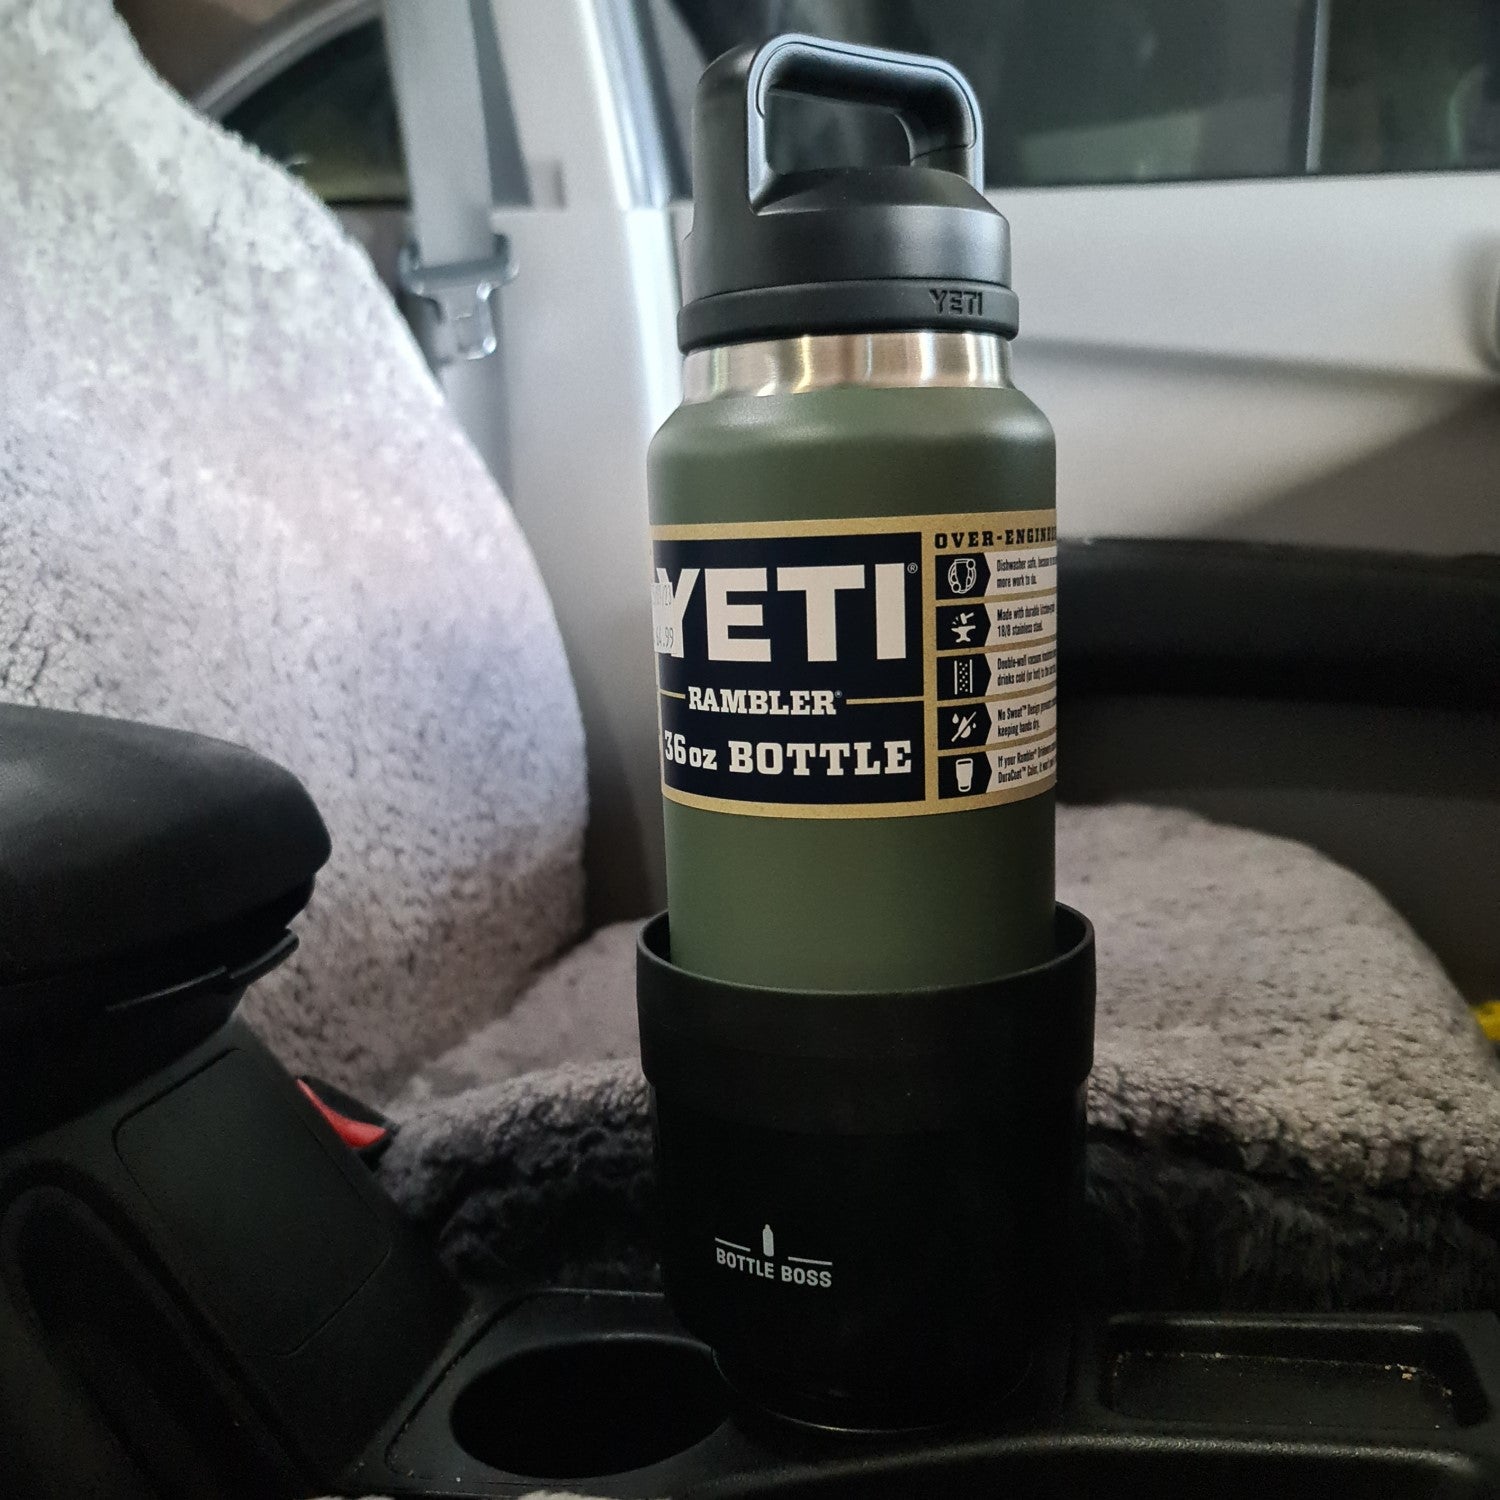 Bottle Boss Cup Holder Adaptor in Car